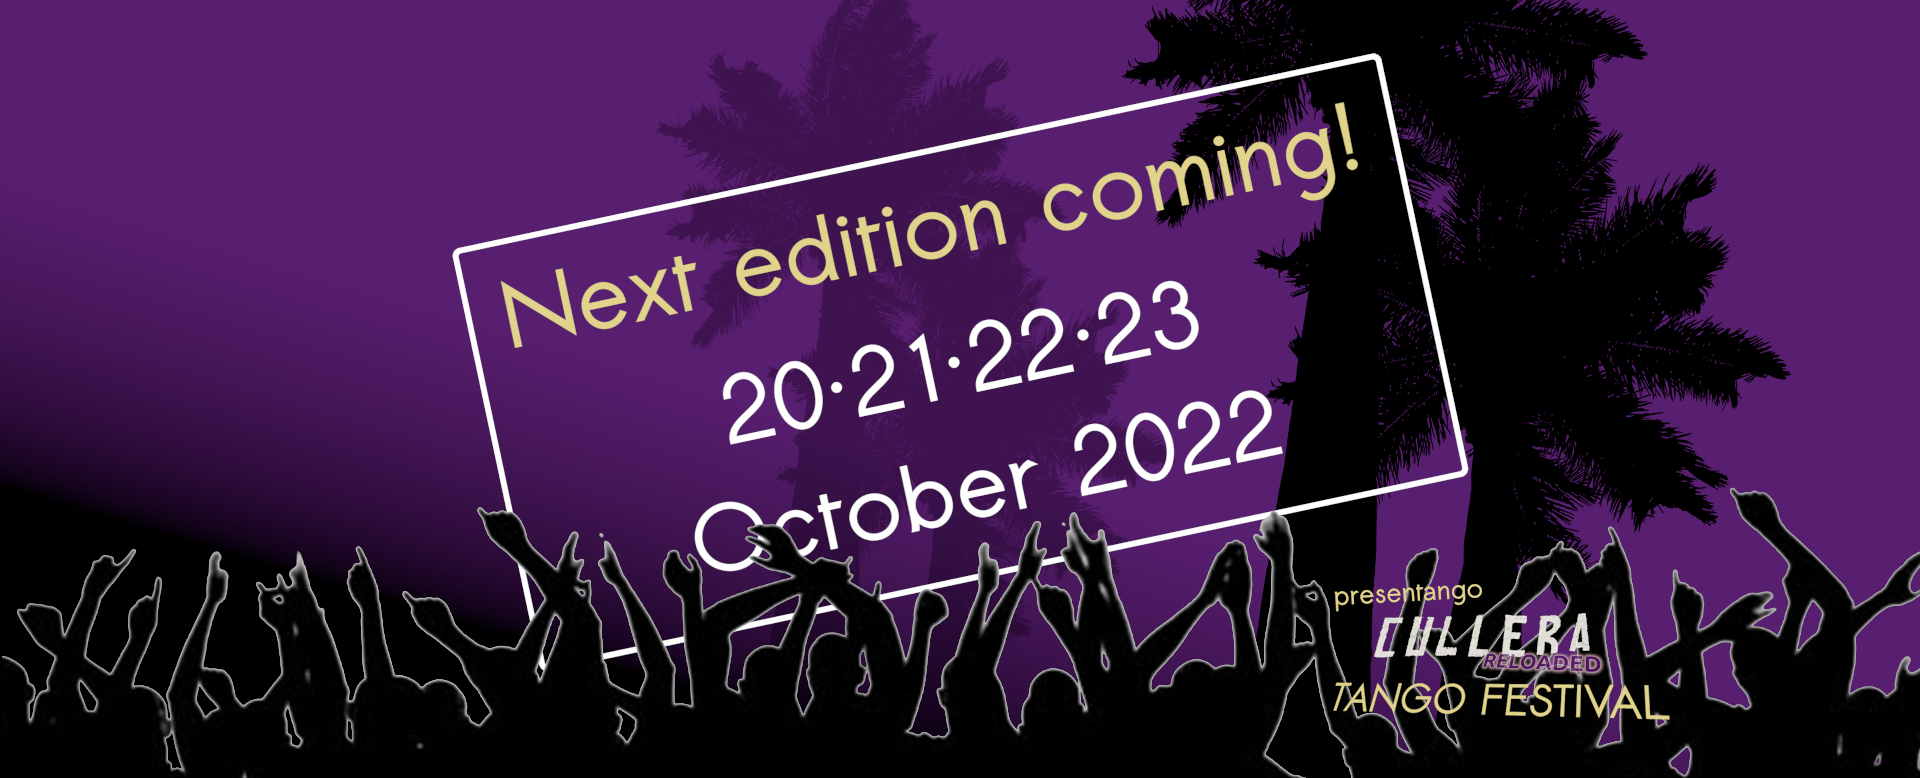 Next Edition Coming - Cullera Tango Festival 2022